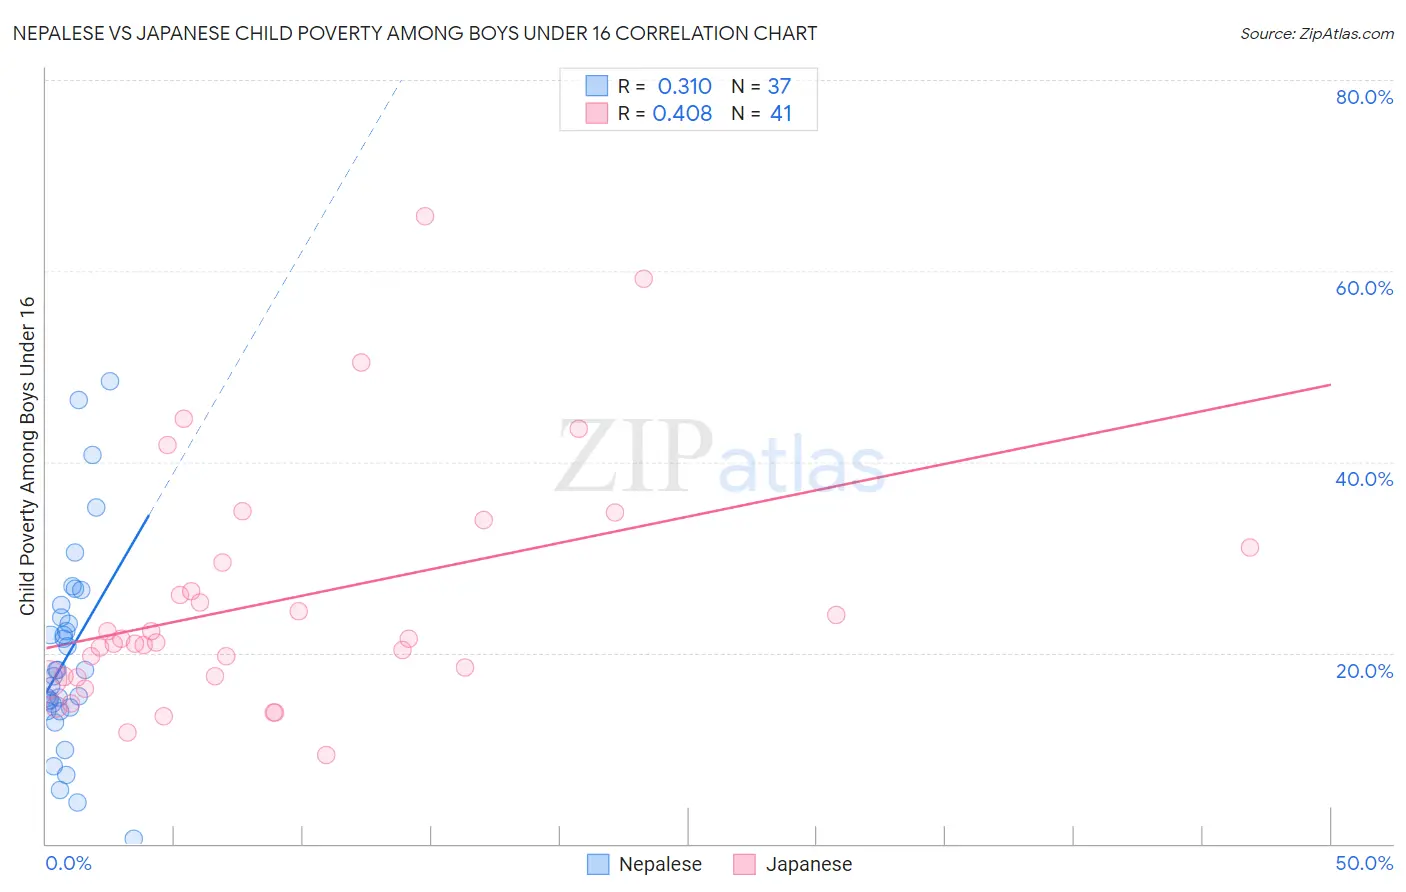 Nepalese vs Japanese Child Poverty Among Boys Under 16